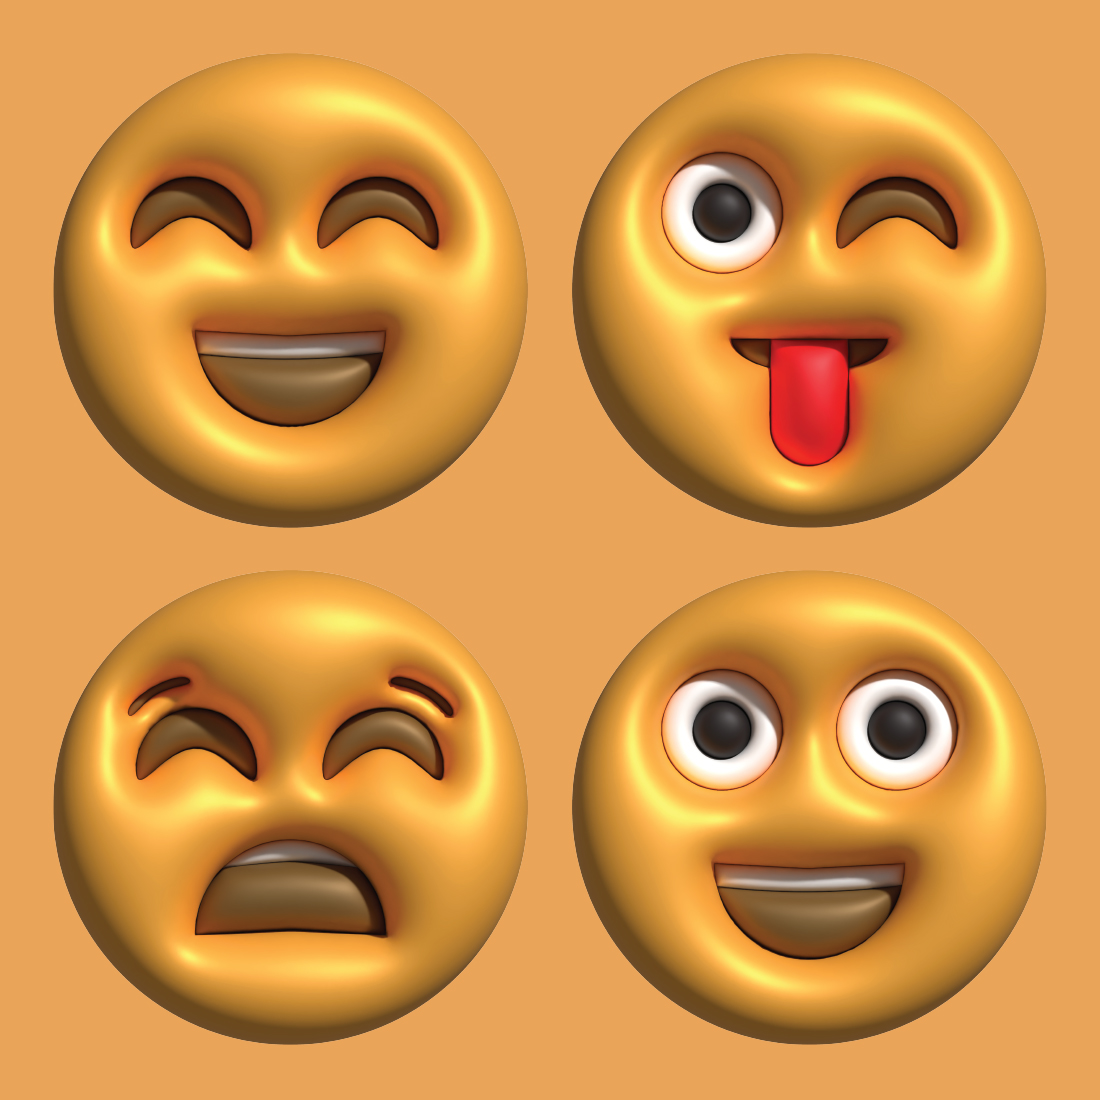 3D Emoticon cover image.